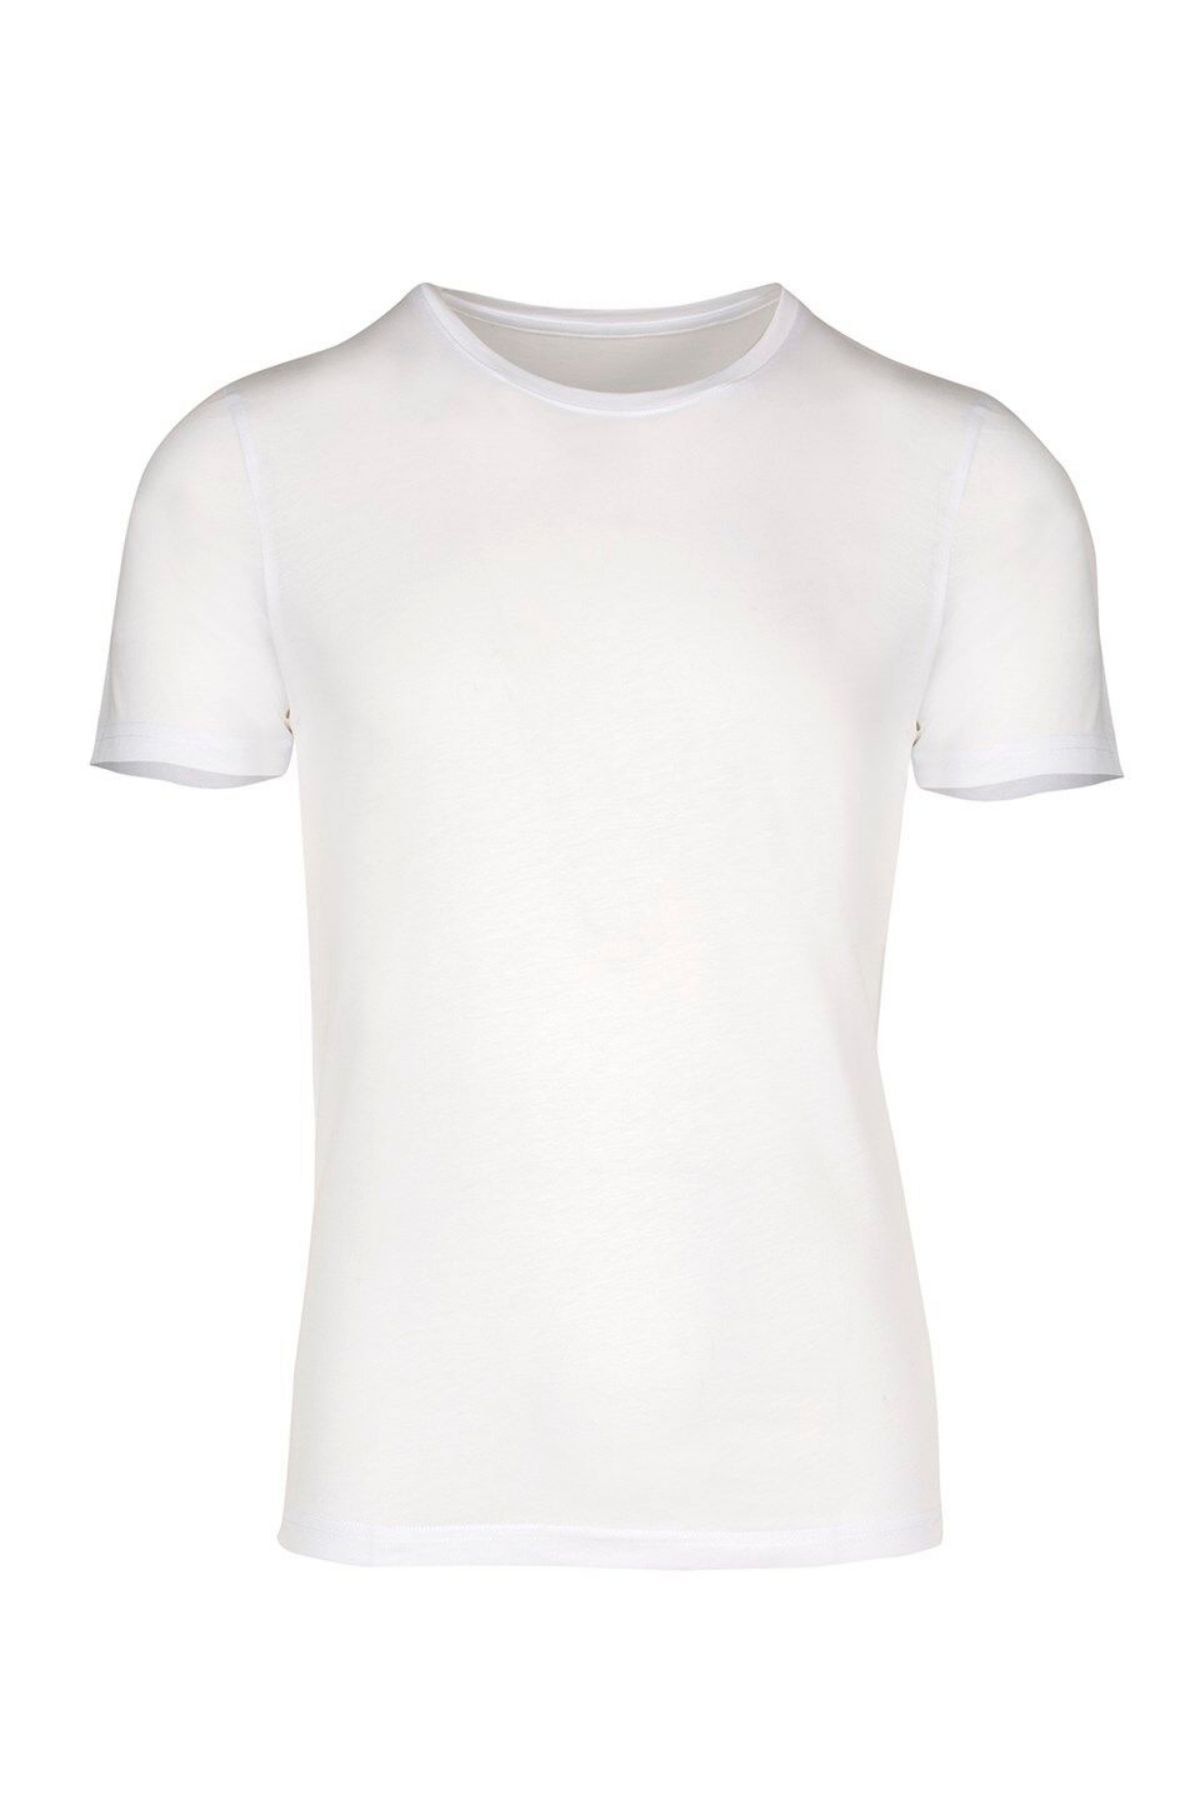 BSM Erkek %100 Süpima Pamuk Kısa Kol Sıfır Yaka T-shirt 41803